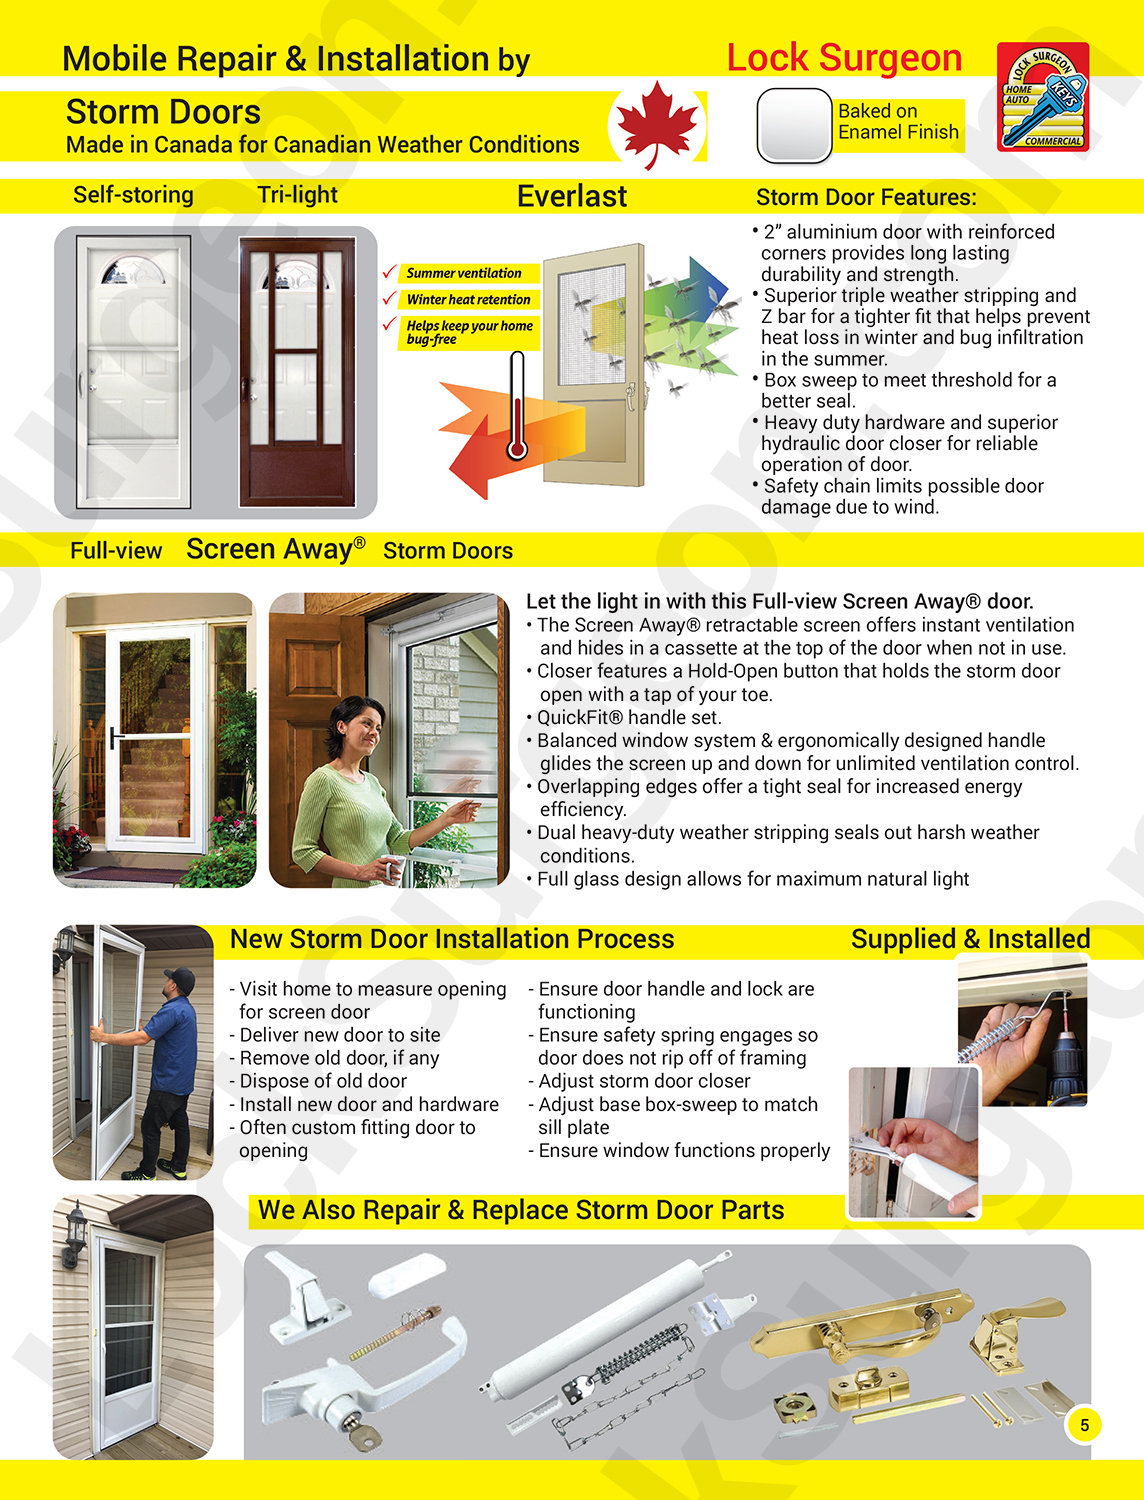 Acheson Residential storm door repair, adjustments, security, sales & installations.